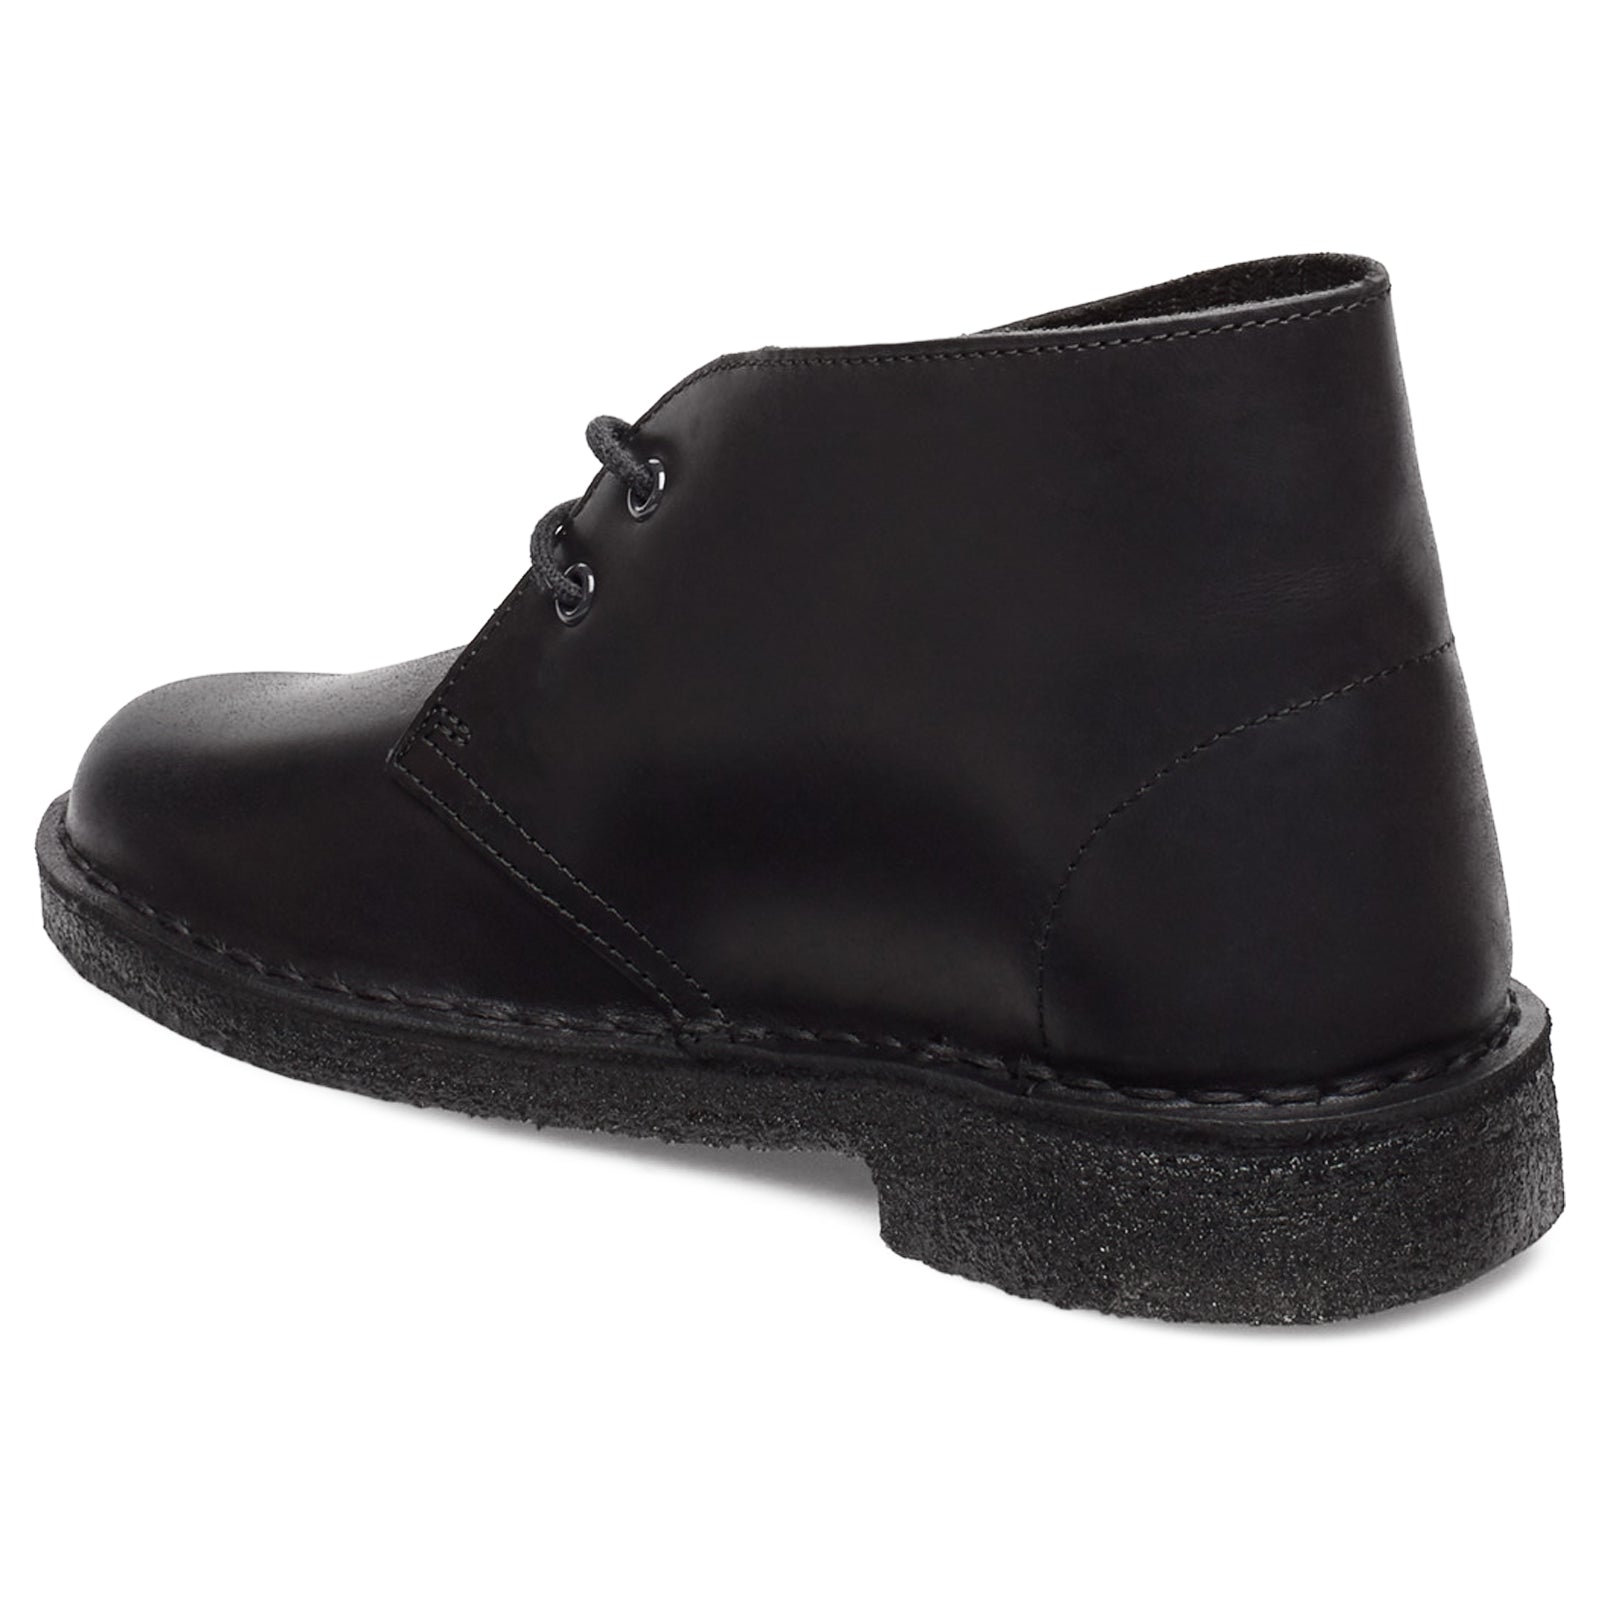 Clarks Originals Womens Boots Desert Boot Leather - UK 7